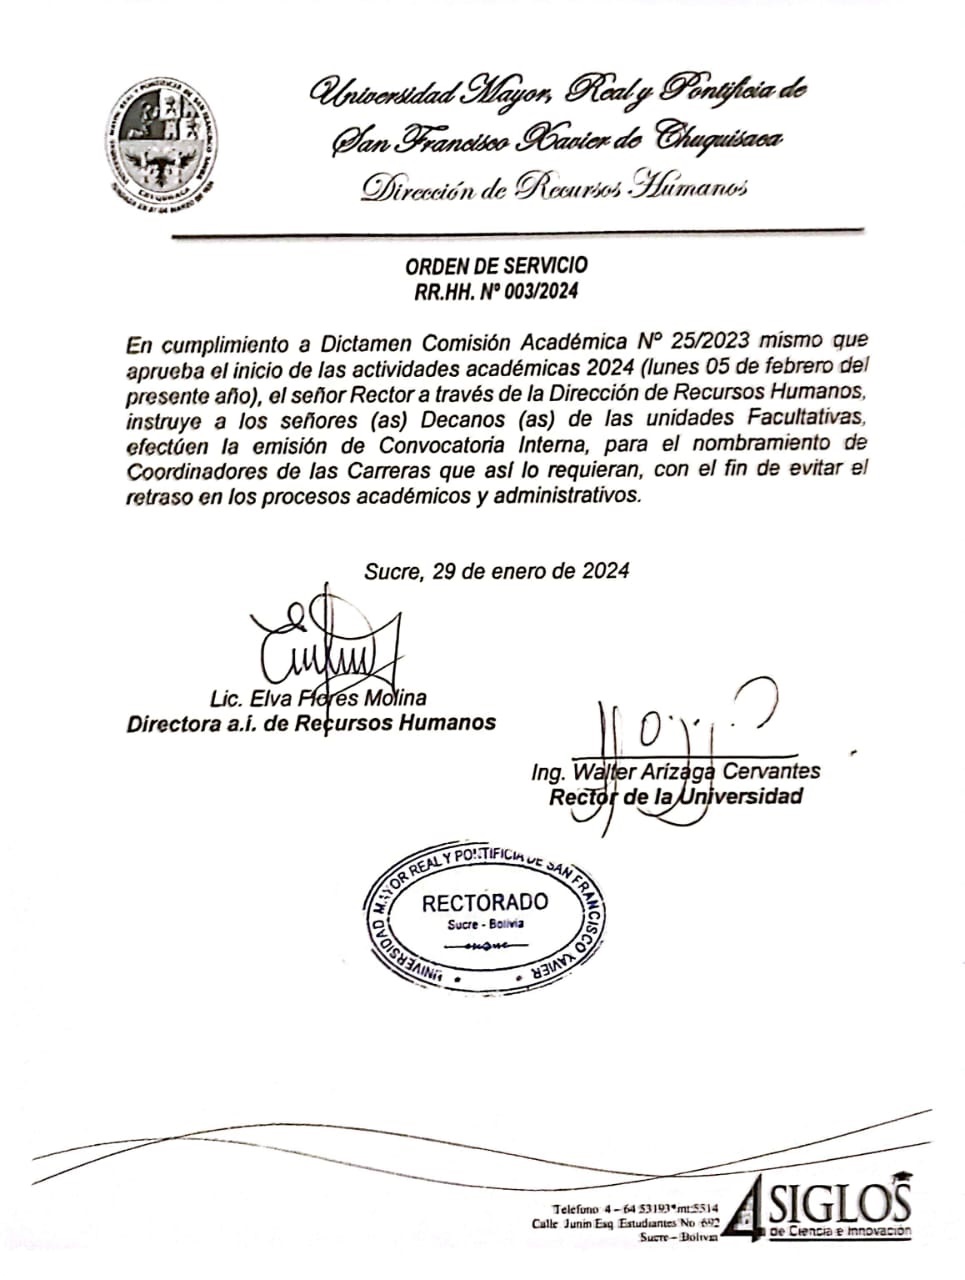 ORDEN DE SERVICIO RR.HH. Nº 003/2024, DICTAMEN COMISIÓN ACADÉMICA 25/2023.